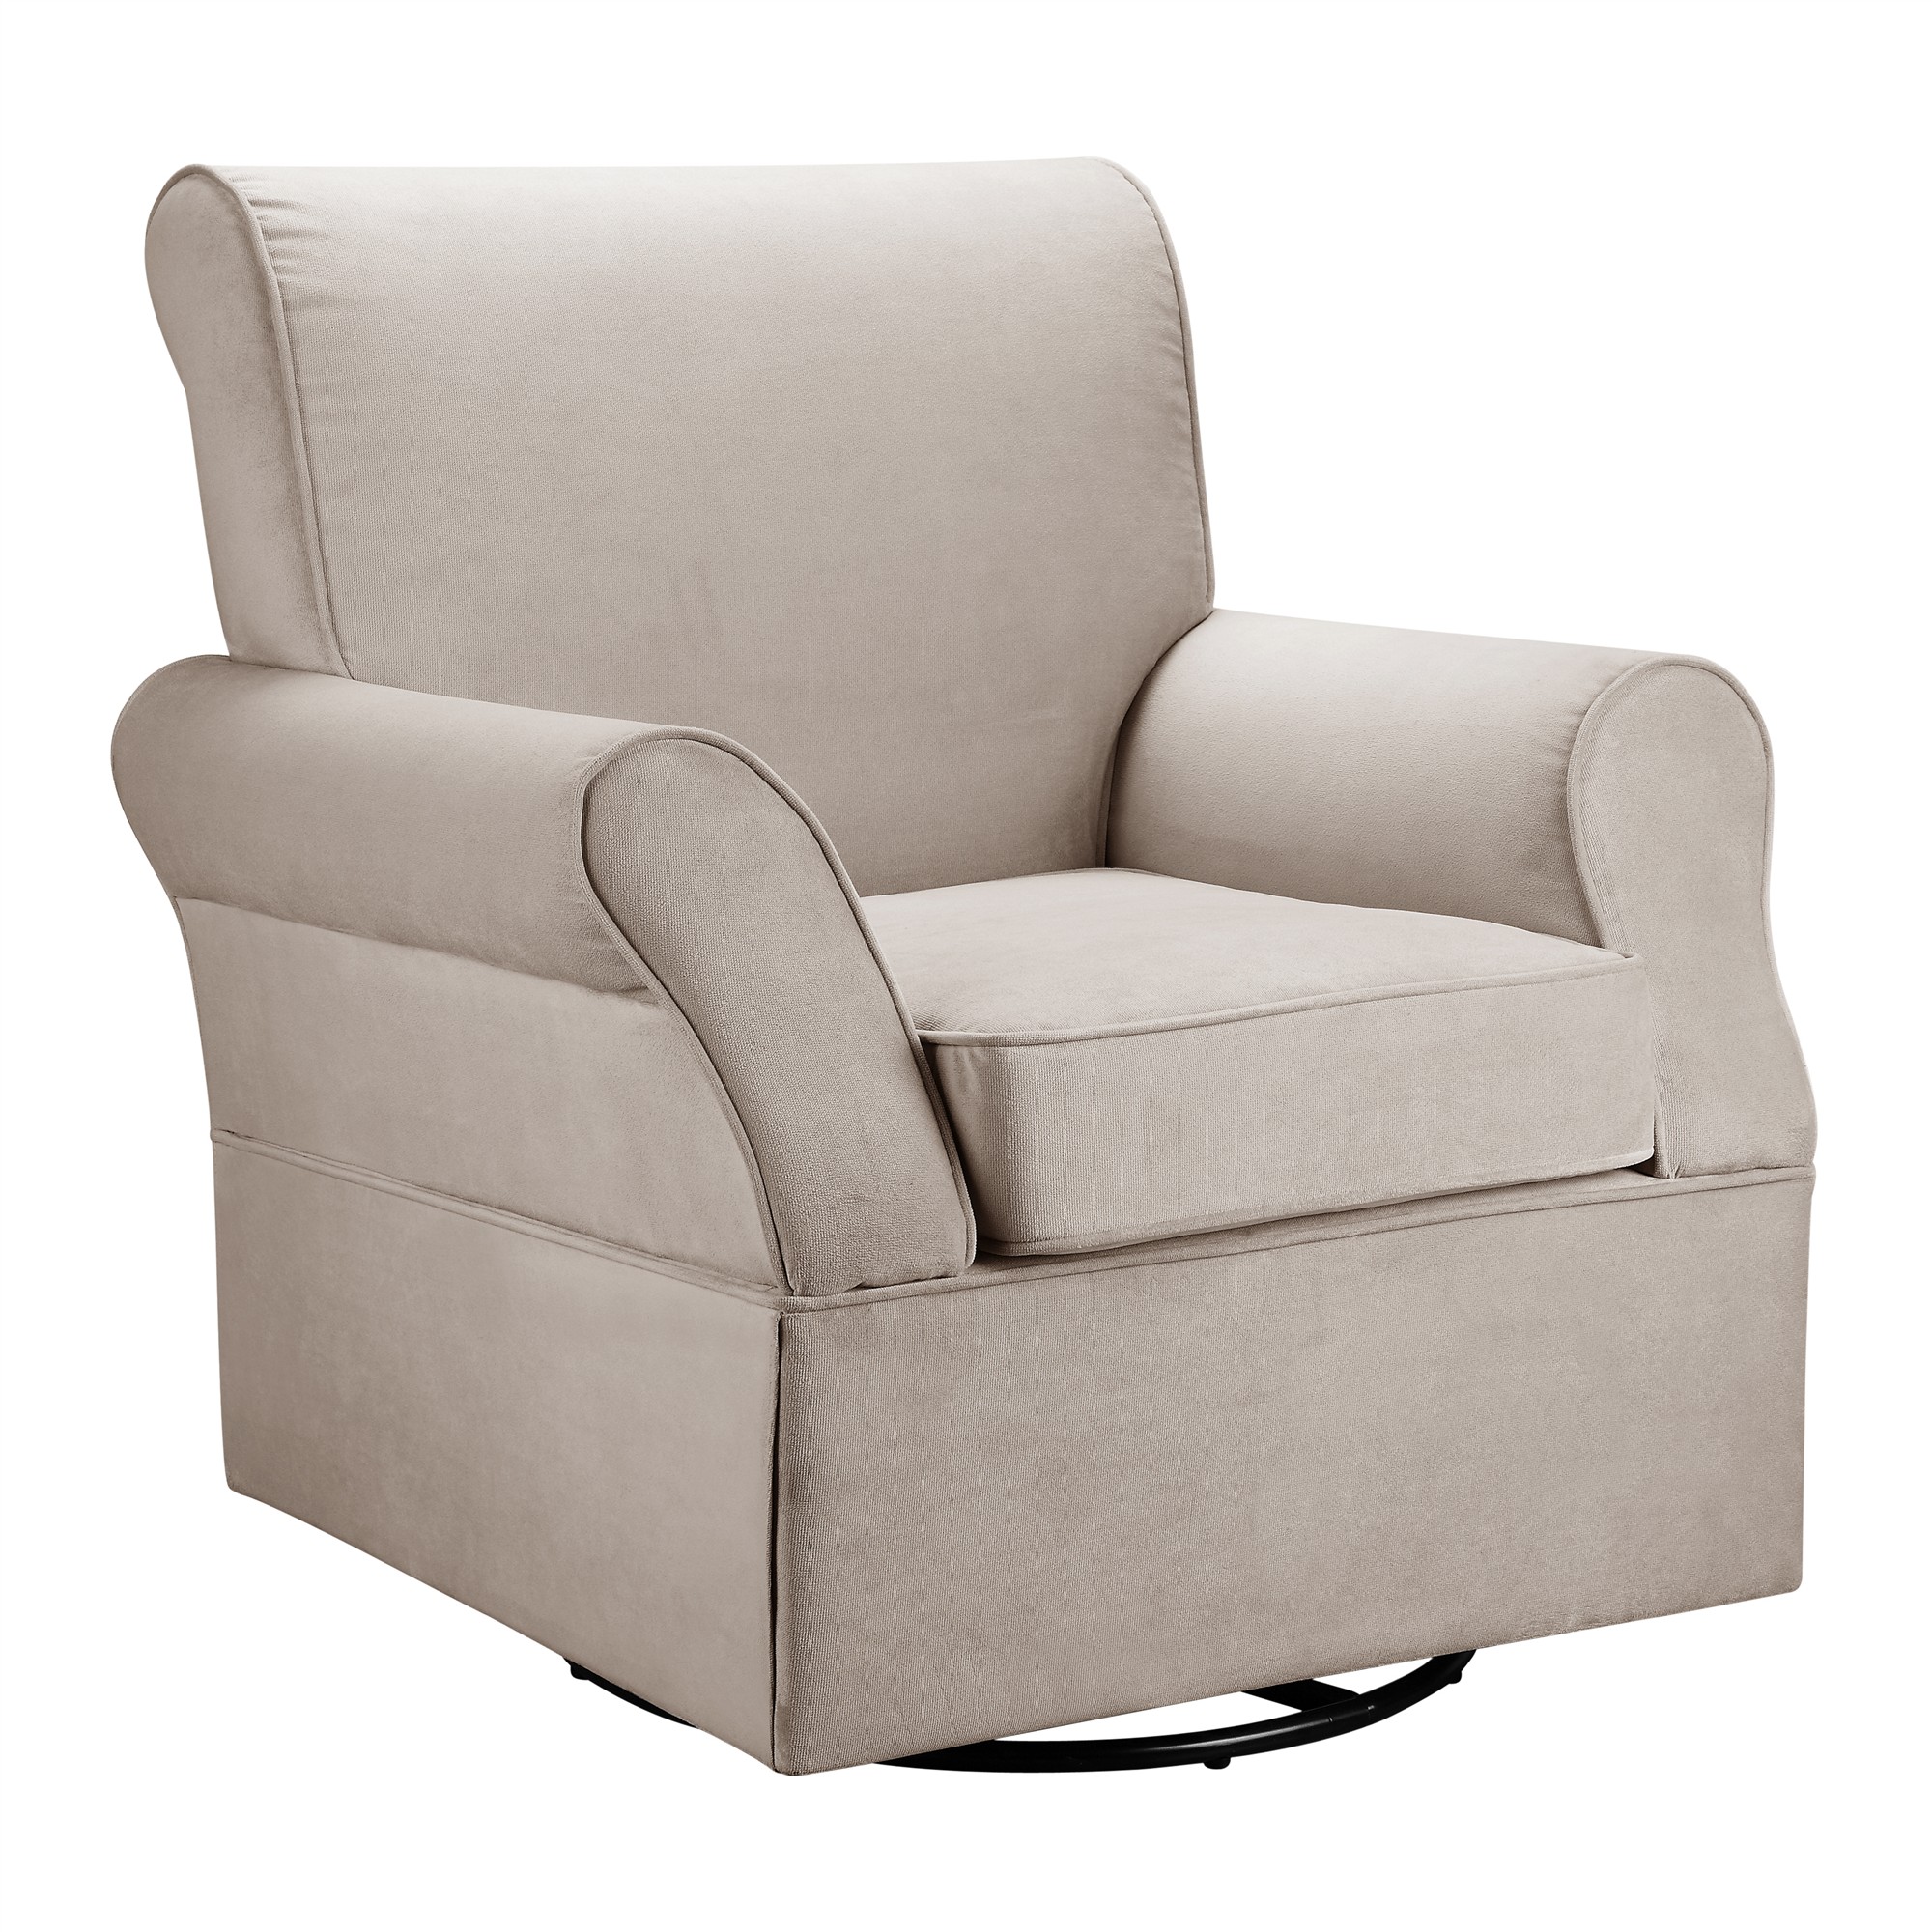 Baby Relax Kelcie Swivel Glider Chair & Ottoman Nursery Set, Beige Microfiber - image 3 of 15